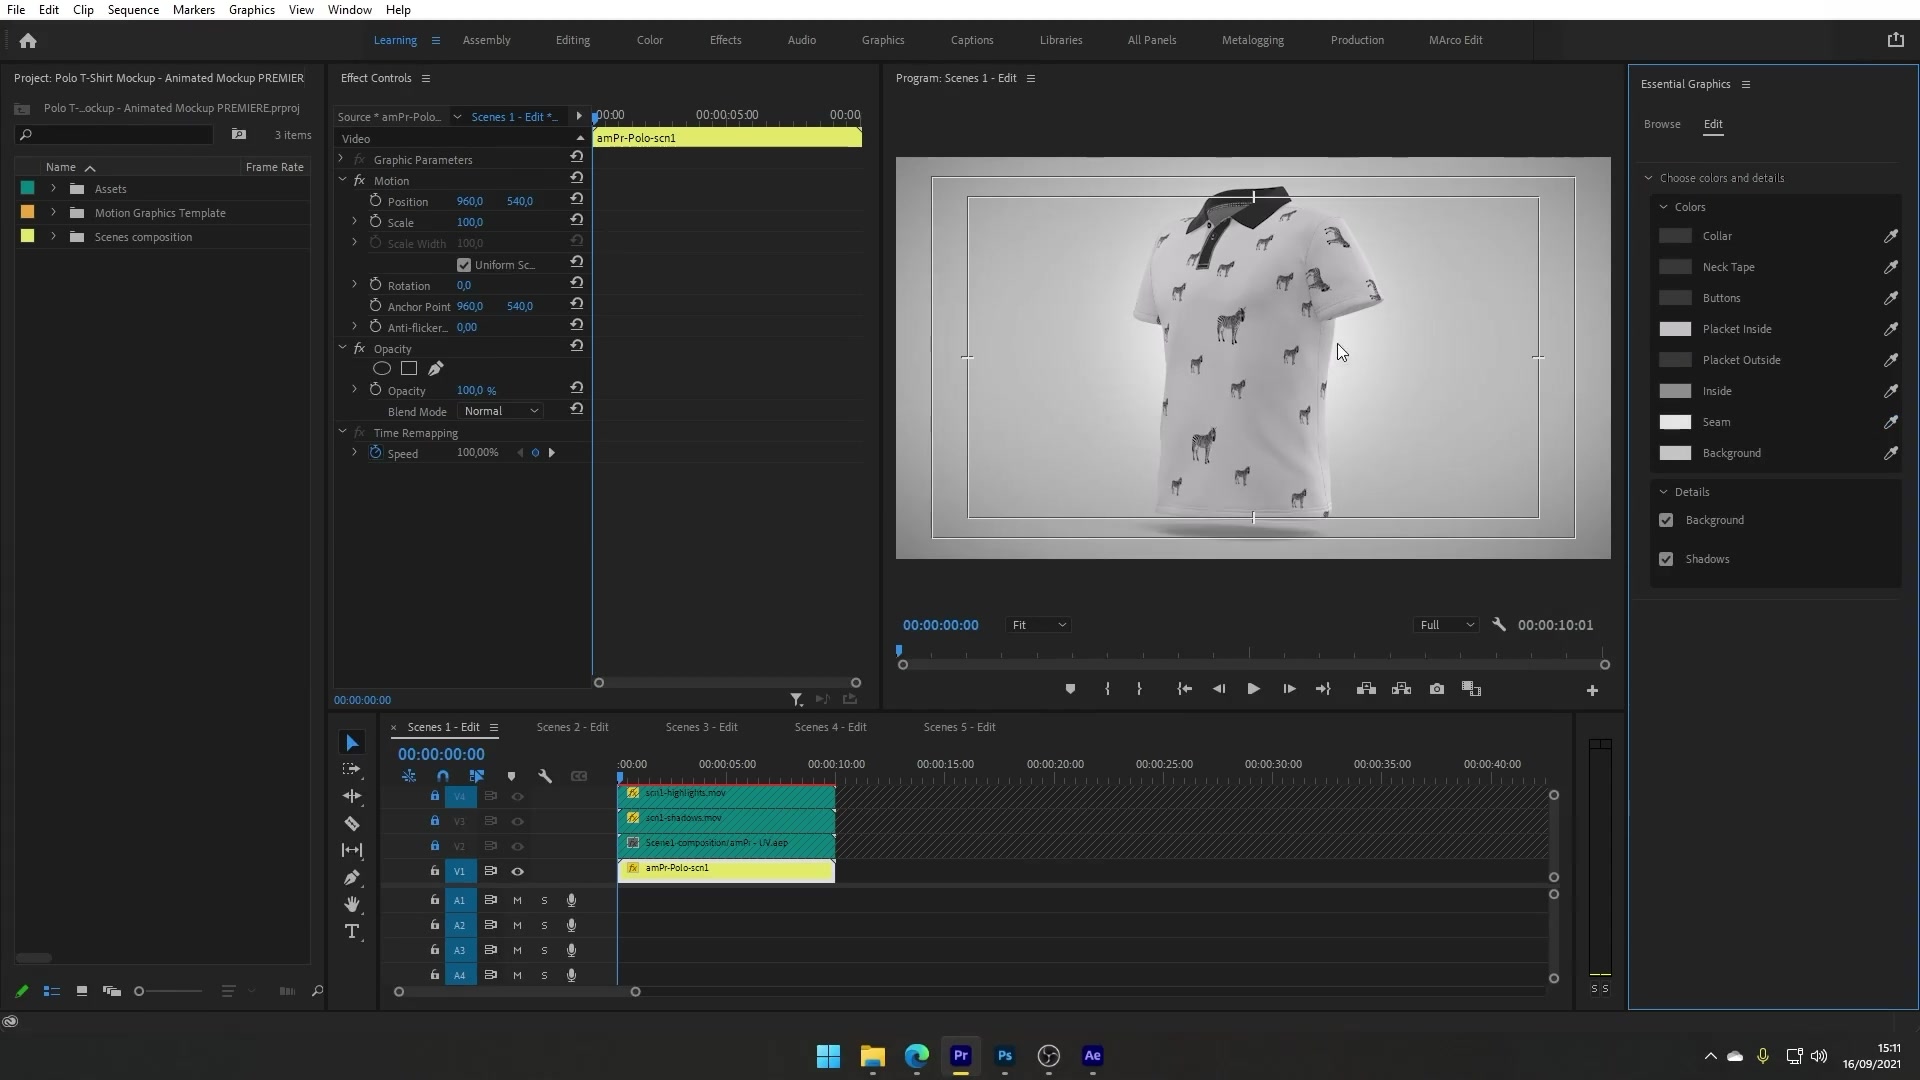 Polo T shirt 5 Scenes Mockup Template Animated Mockup PREMIERE Videohive 33877905 Premiere Pro Image 5